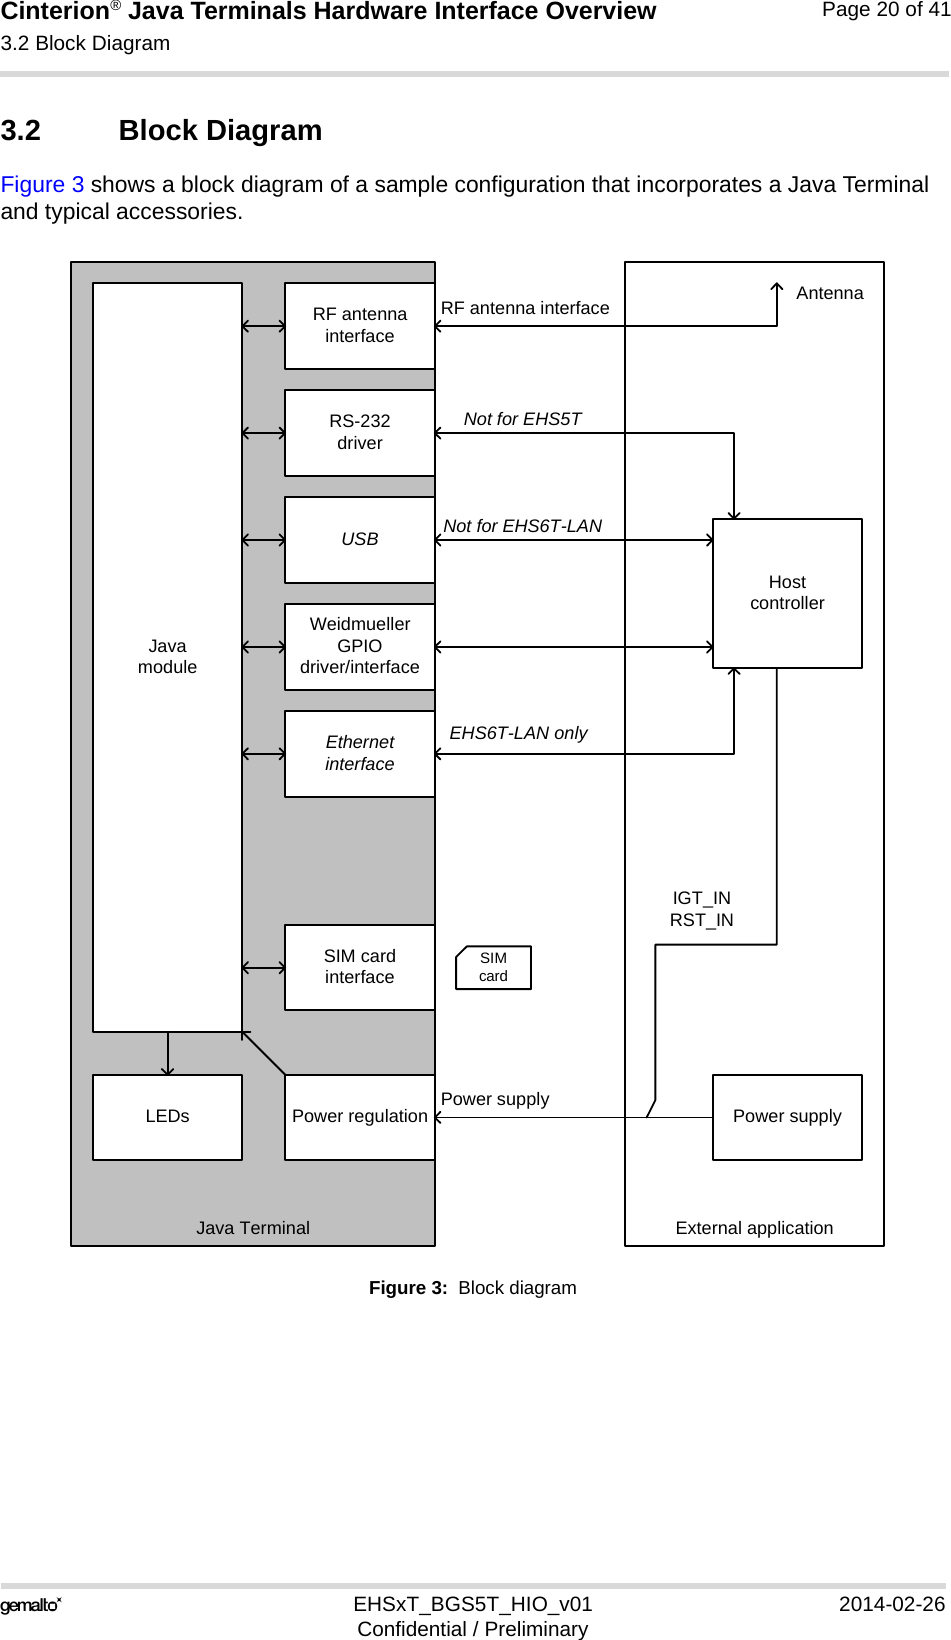 Cinterion® Java Terminals Hardware Interface Overview3.2 Block Diagram32EHSxT_BGS5T_HIO_v01 2014-02-26Confidential / PreliminaryPage 20 of 413.2 Block DiagramFigure 3 shows a block diagram of a sample configuration that incorporates a Java Terminal and typical accessories.Figure 3:  Block diagramJava TerminalJavamoduleRS-232driverUSBSIM cardinterfacePower regulationRF antennainterfaceLEDsRF antenna interfaceHostcontrollerPower supplyExternal applicationPower supplySIMcardAntennaIGT_INRST_INWeidmueller GPIOdriver/interfaceEthernetinterfaceEHS6T-LAN onlyNot for EHS6T-LANNot for EHS5T